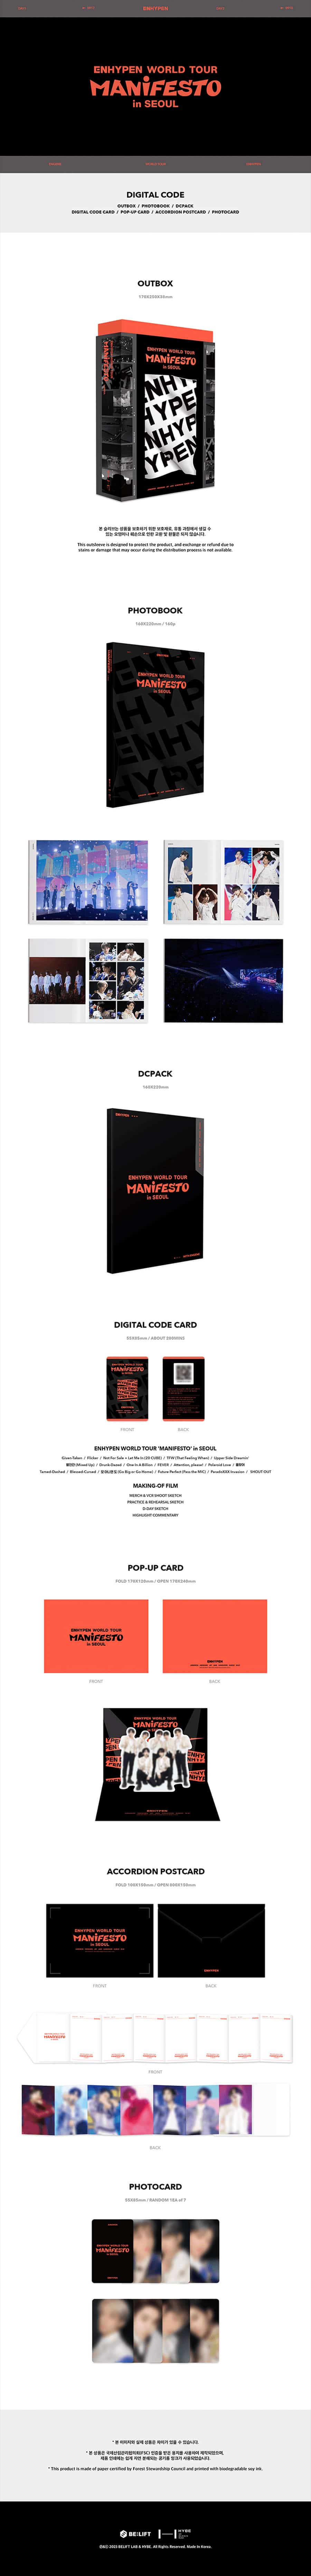 enhypen-manifesto-in-seoul-digital-code-wholesale